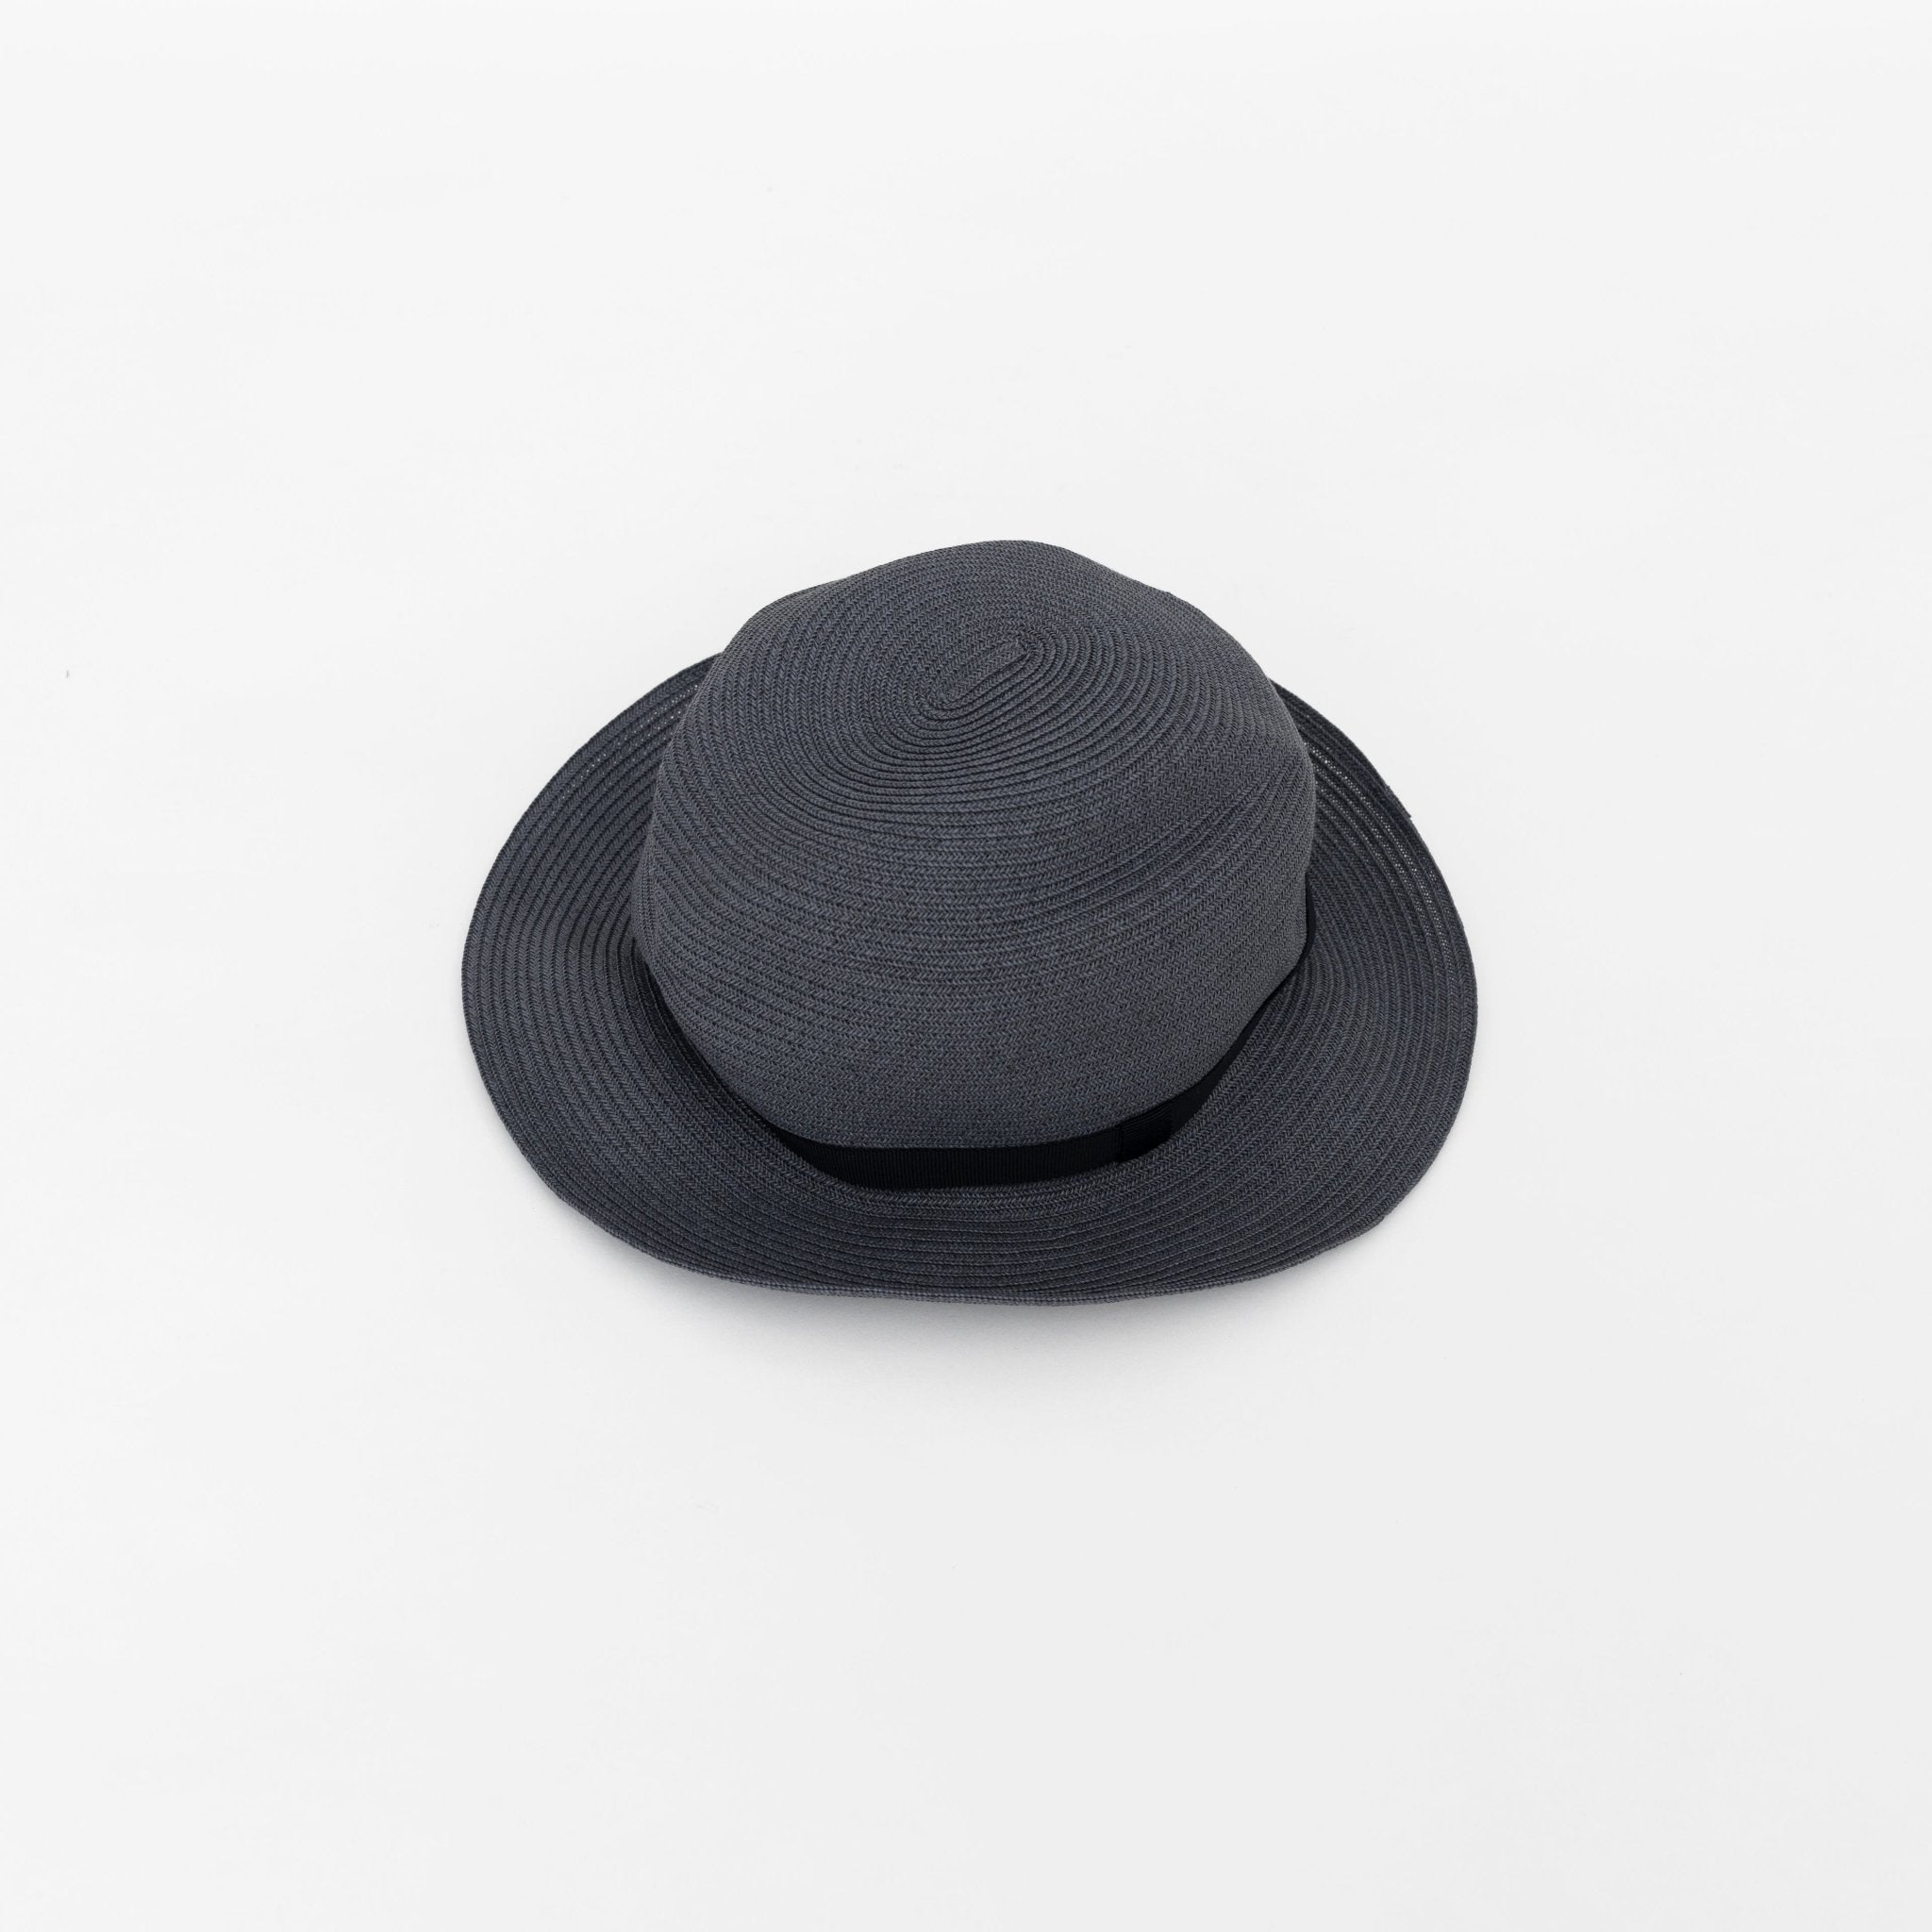 Mature HA Box Hat - 6.5 cm brim